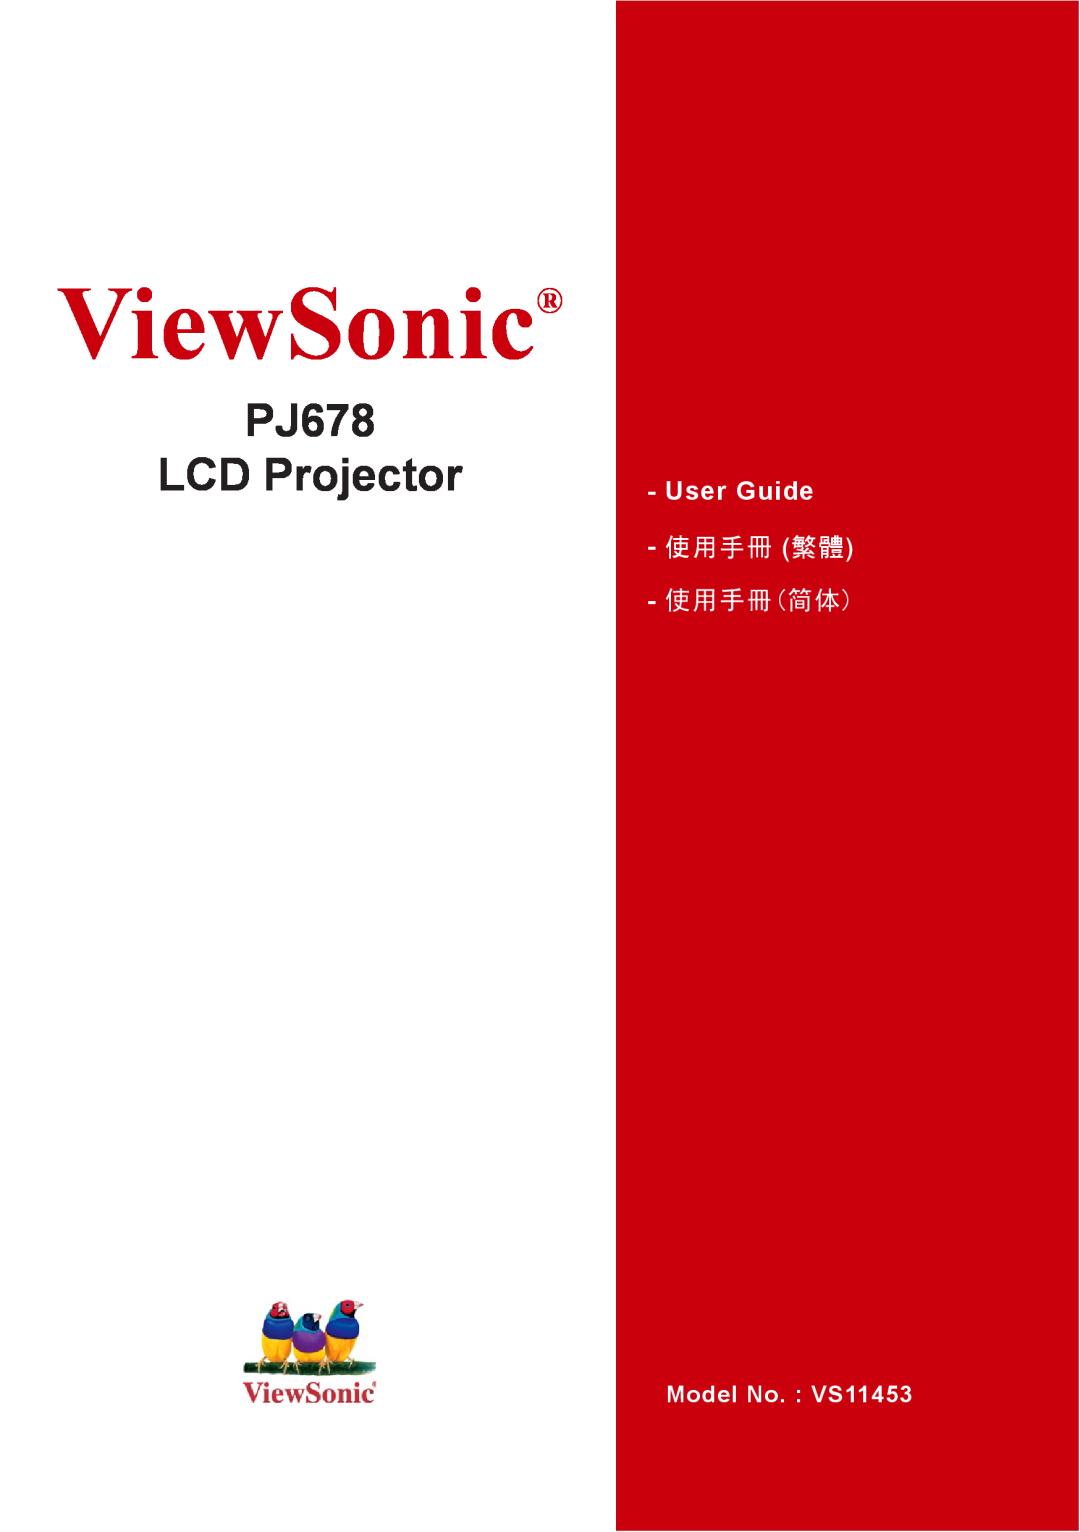 ViewSonic manual ViewSonic, PJ678 LCD Projector, User Guide, 使用手冊 繁體, 使用手冊简体, Model No. VS11453 